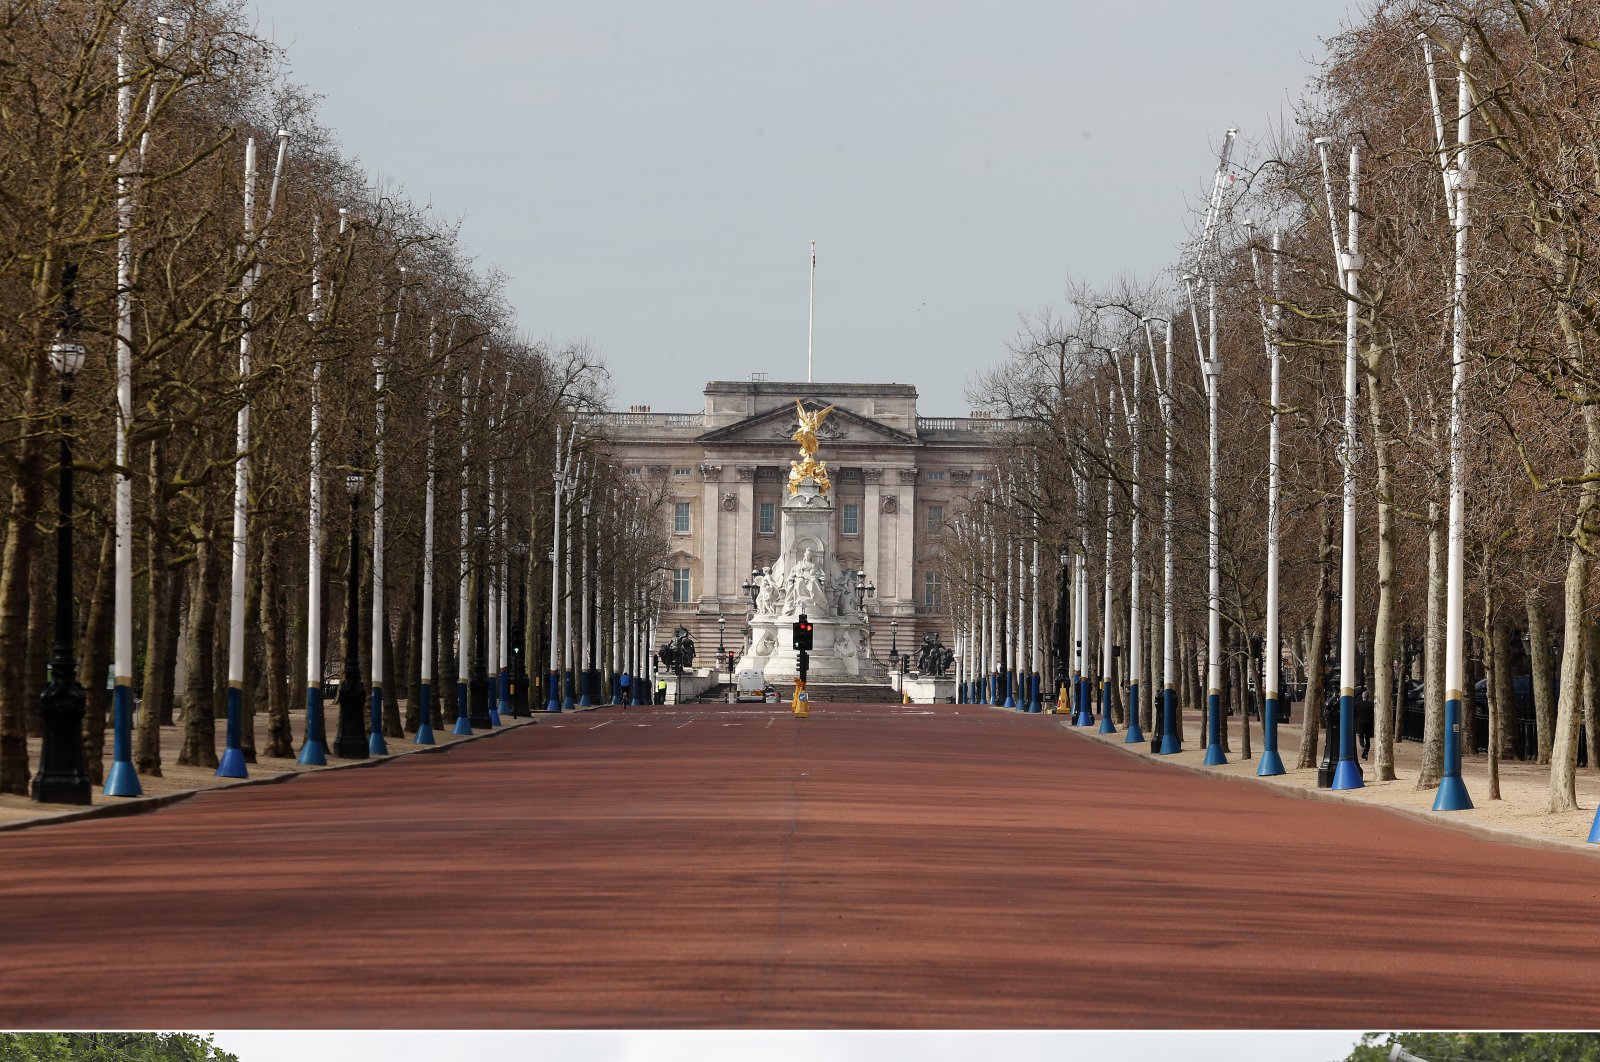 The deserted scene taken at Buckingham Palace on Wednesday, April 1, 2020. (AP Photo)